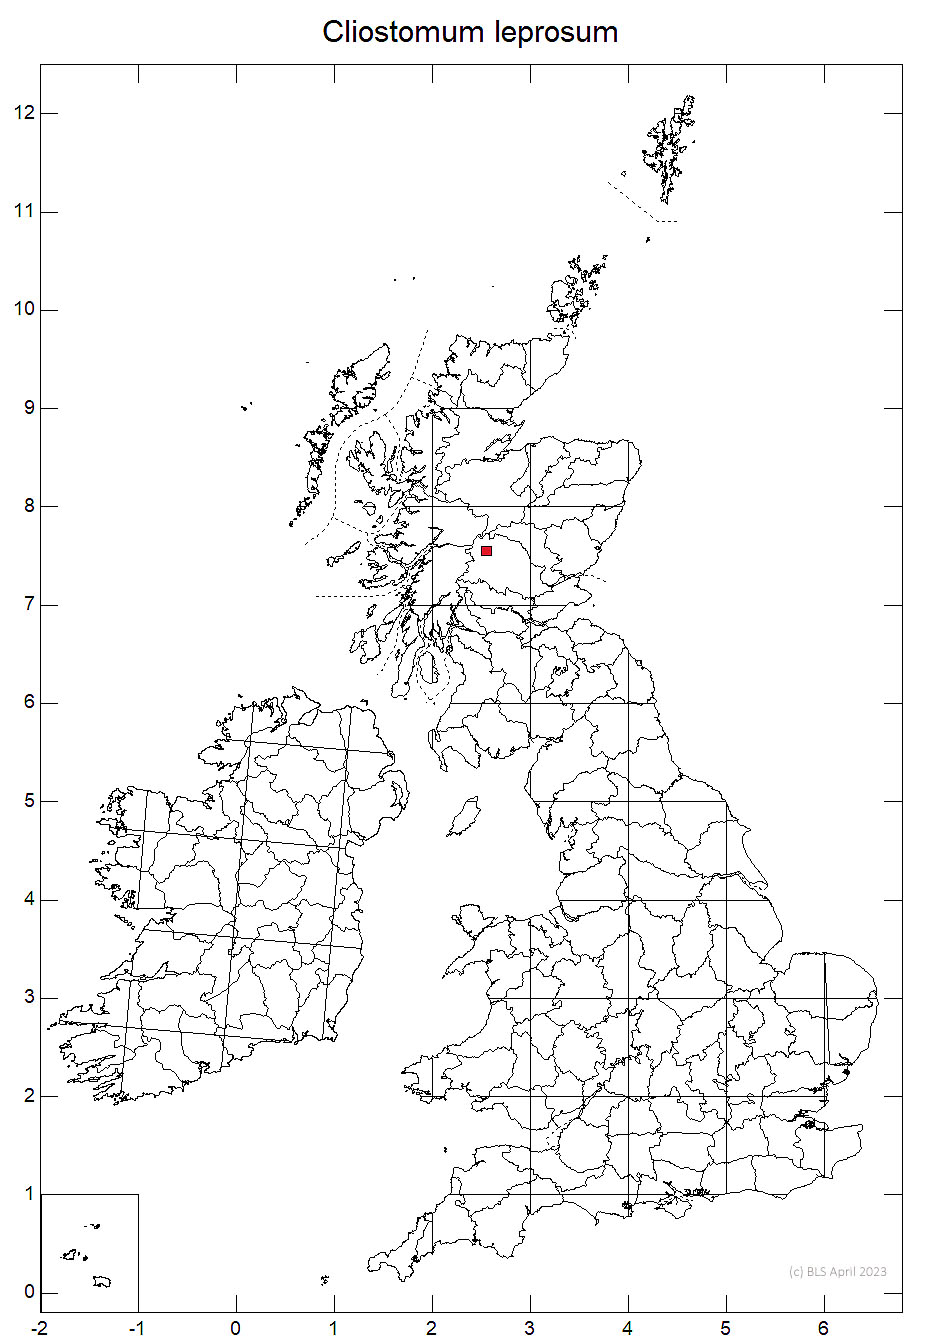 Cliostomum leprosum 10km sq distribution map